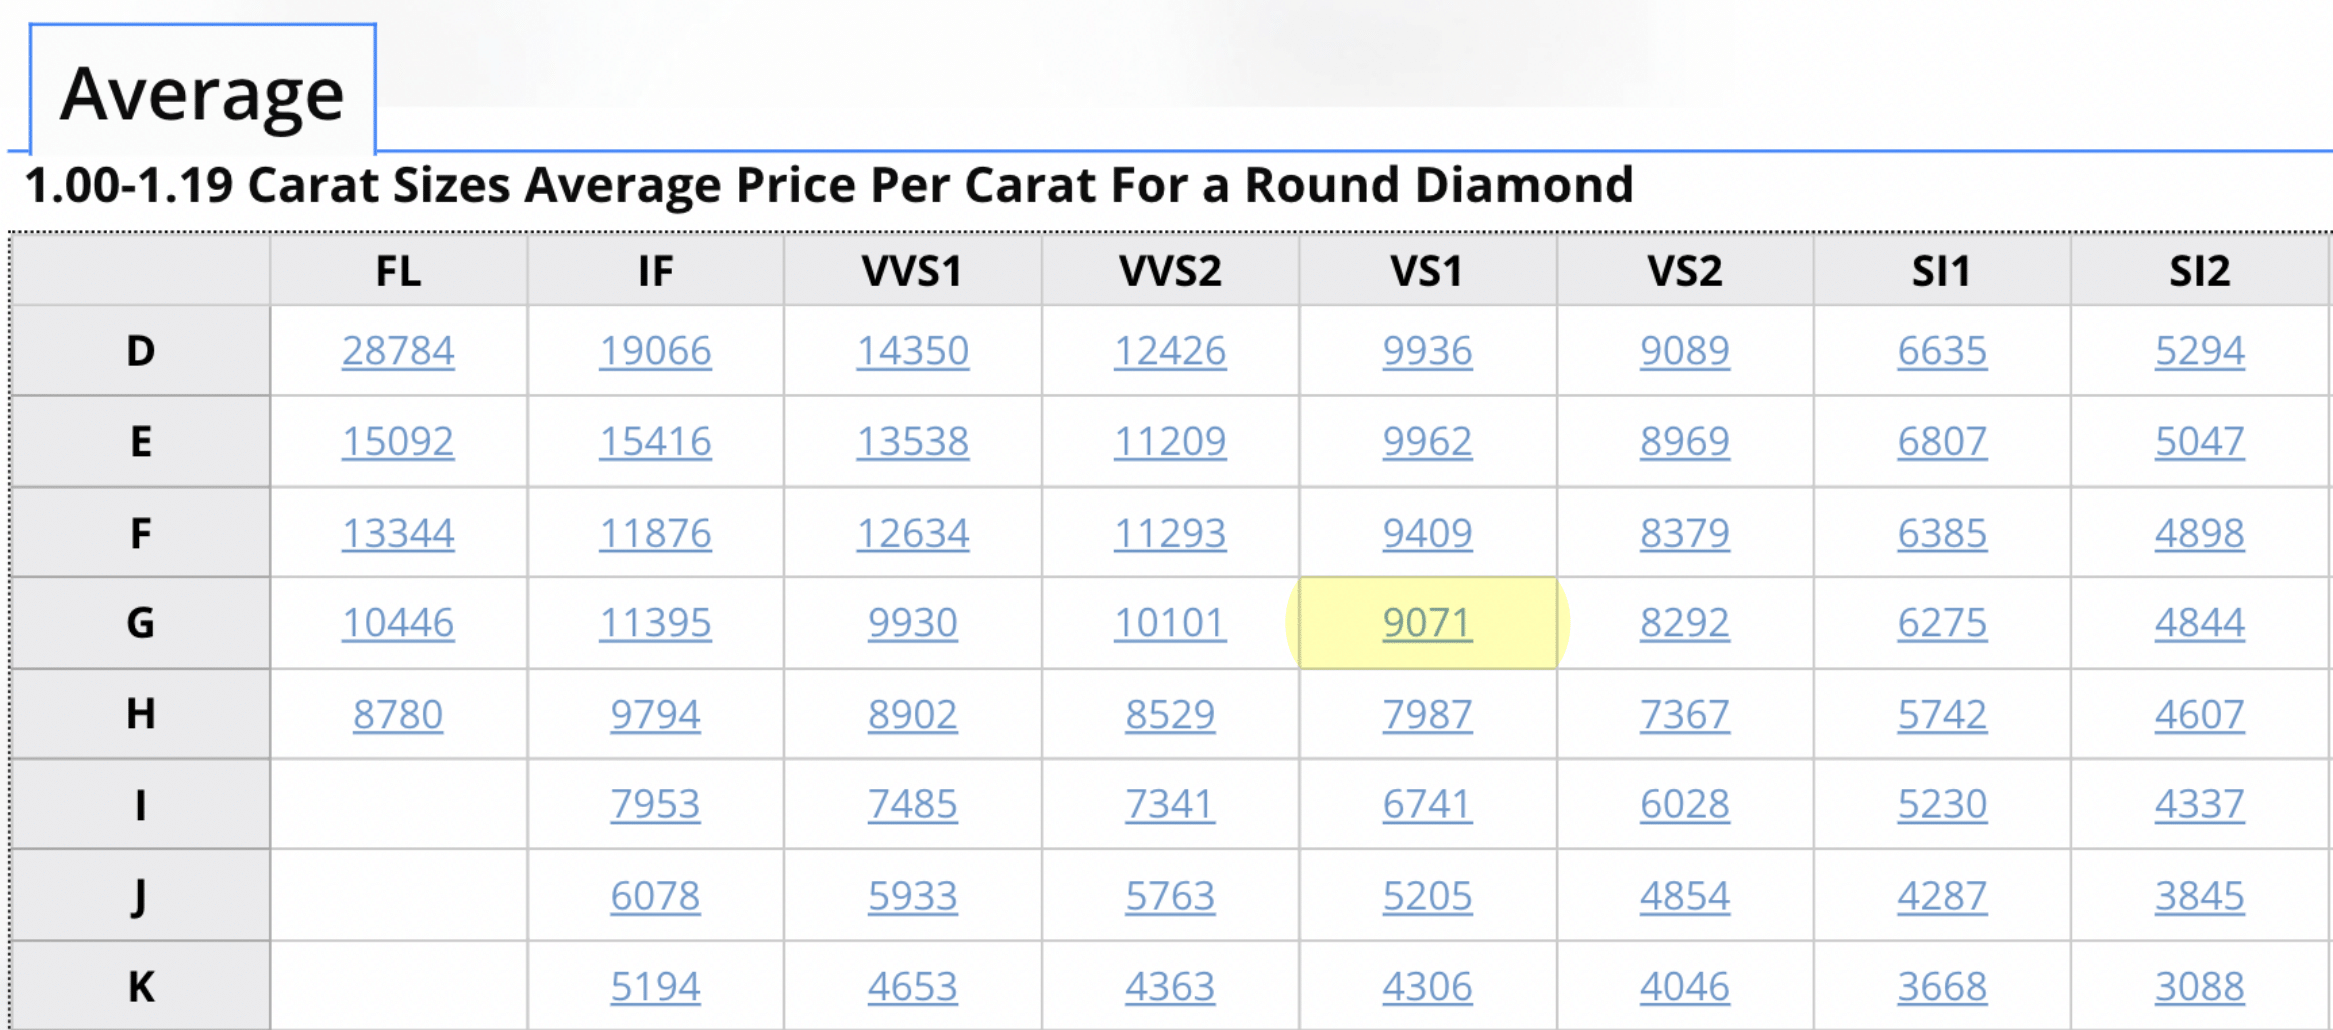 Carat Sizes Average Price Per Carat For a Round Diamond - October 2022